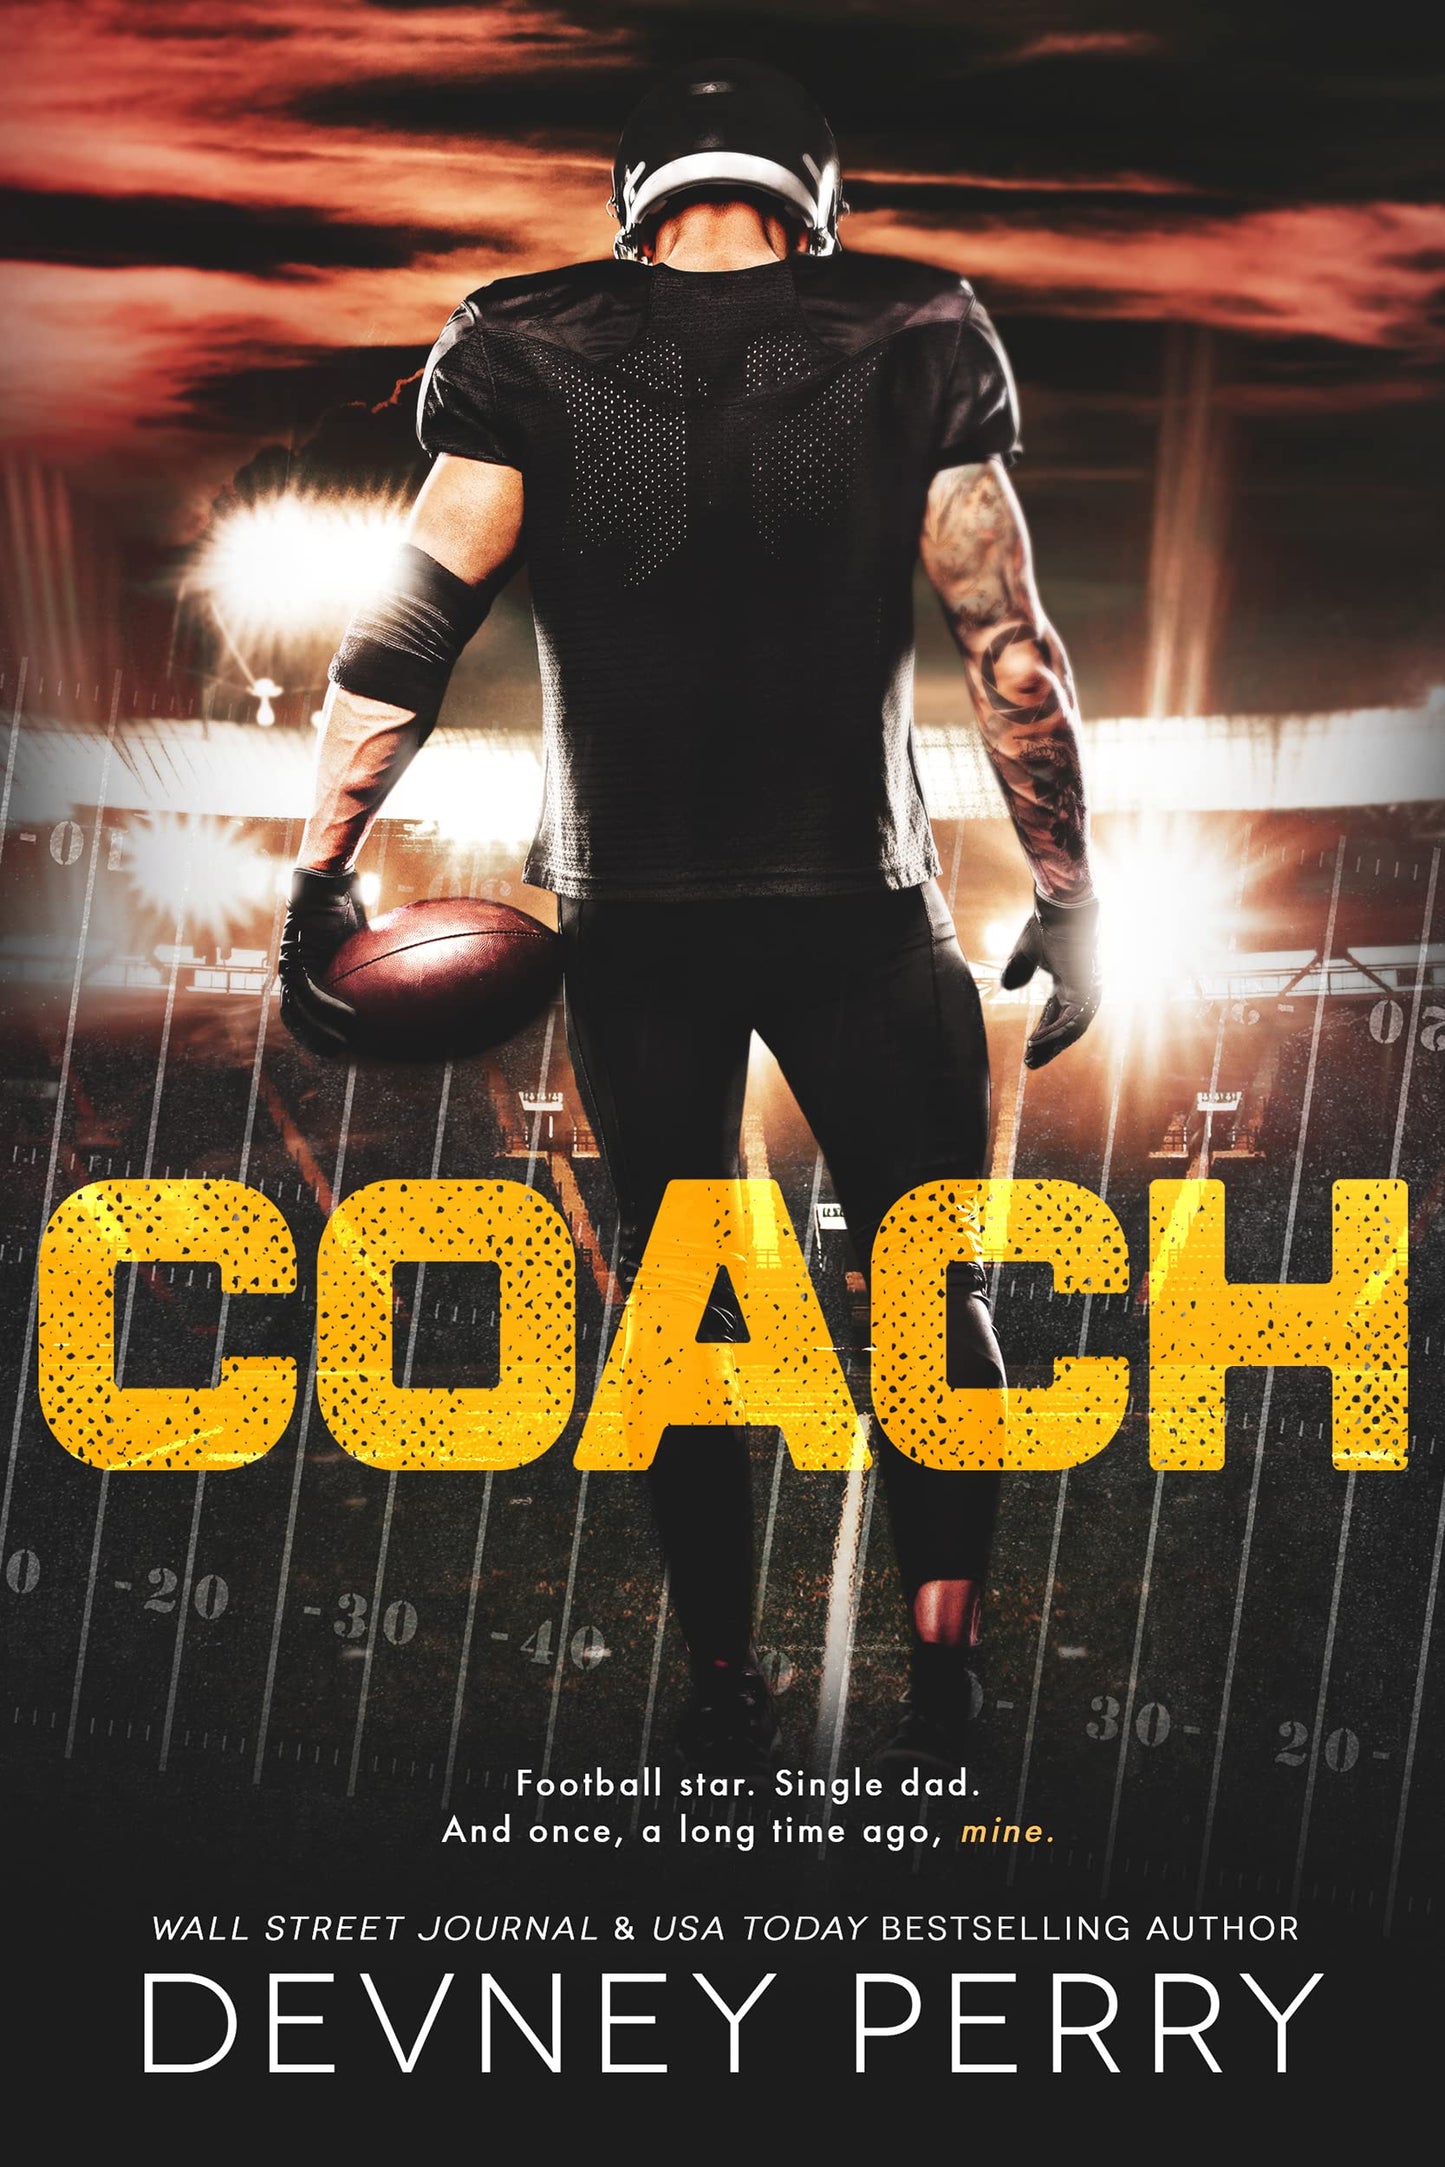 Coach - Devney Perry